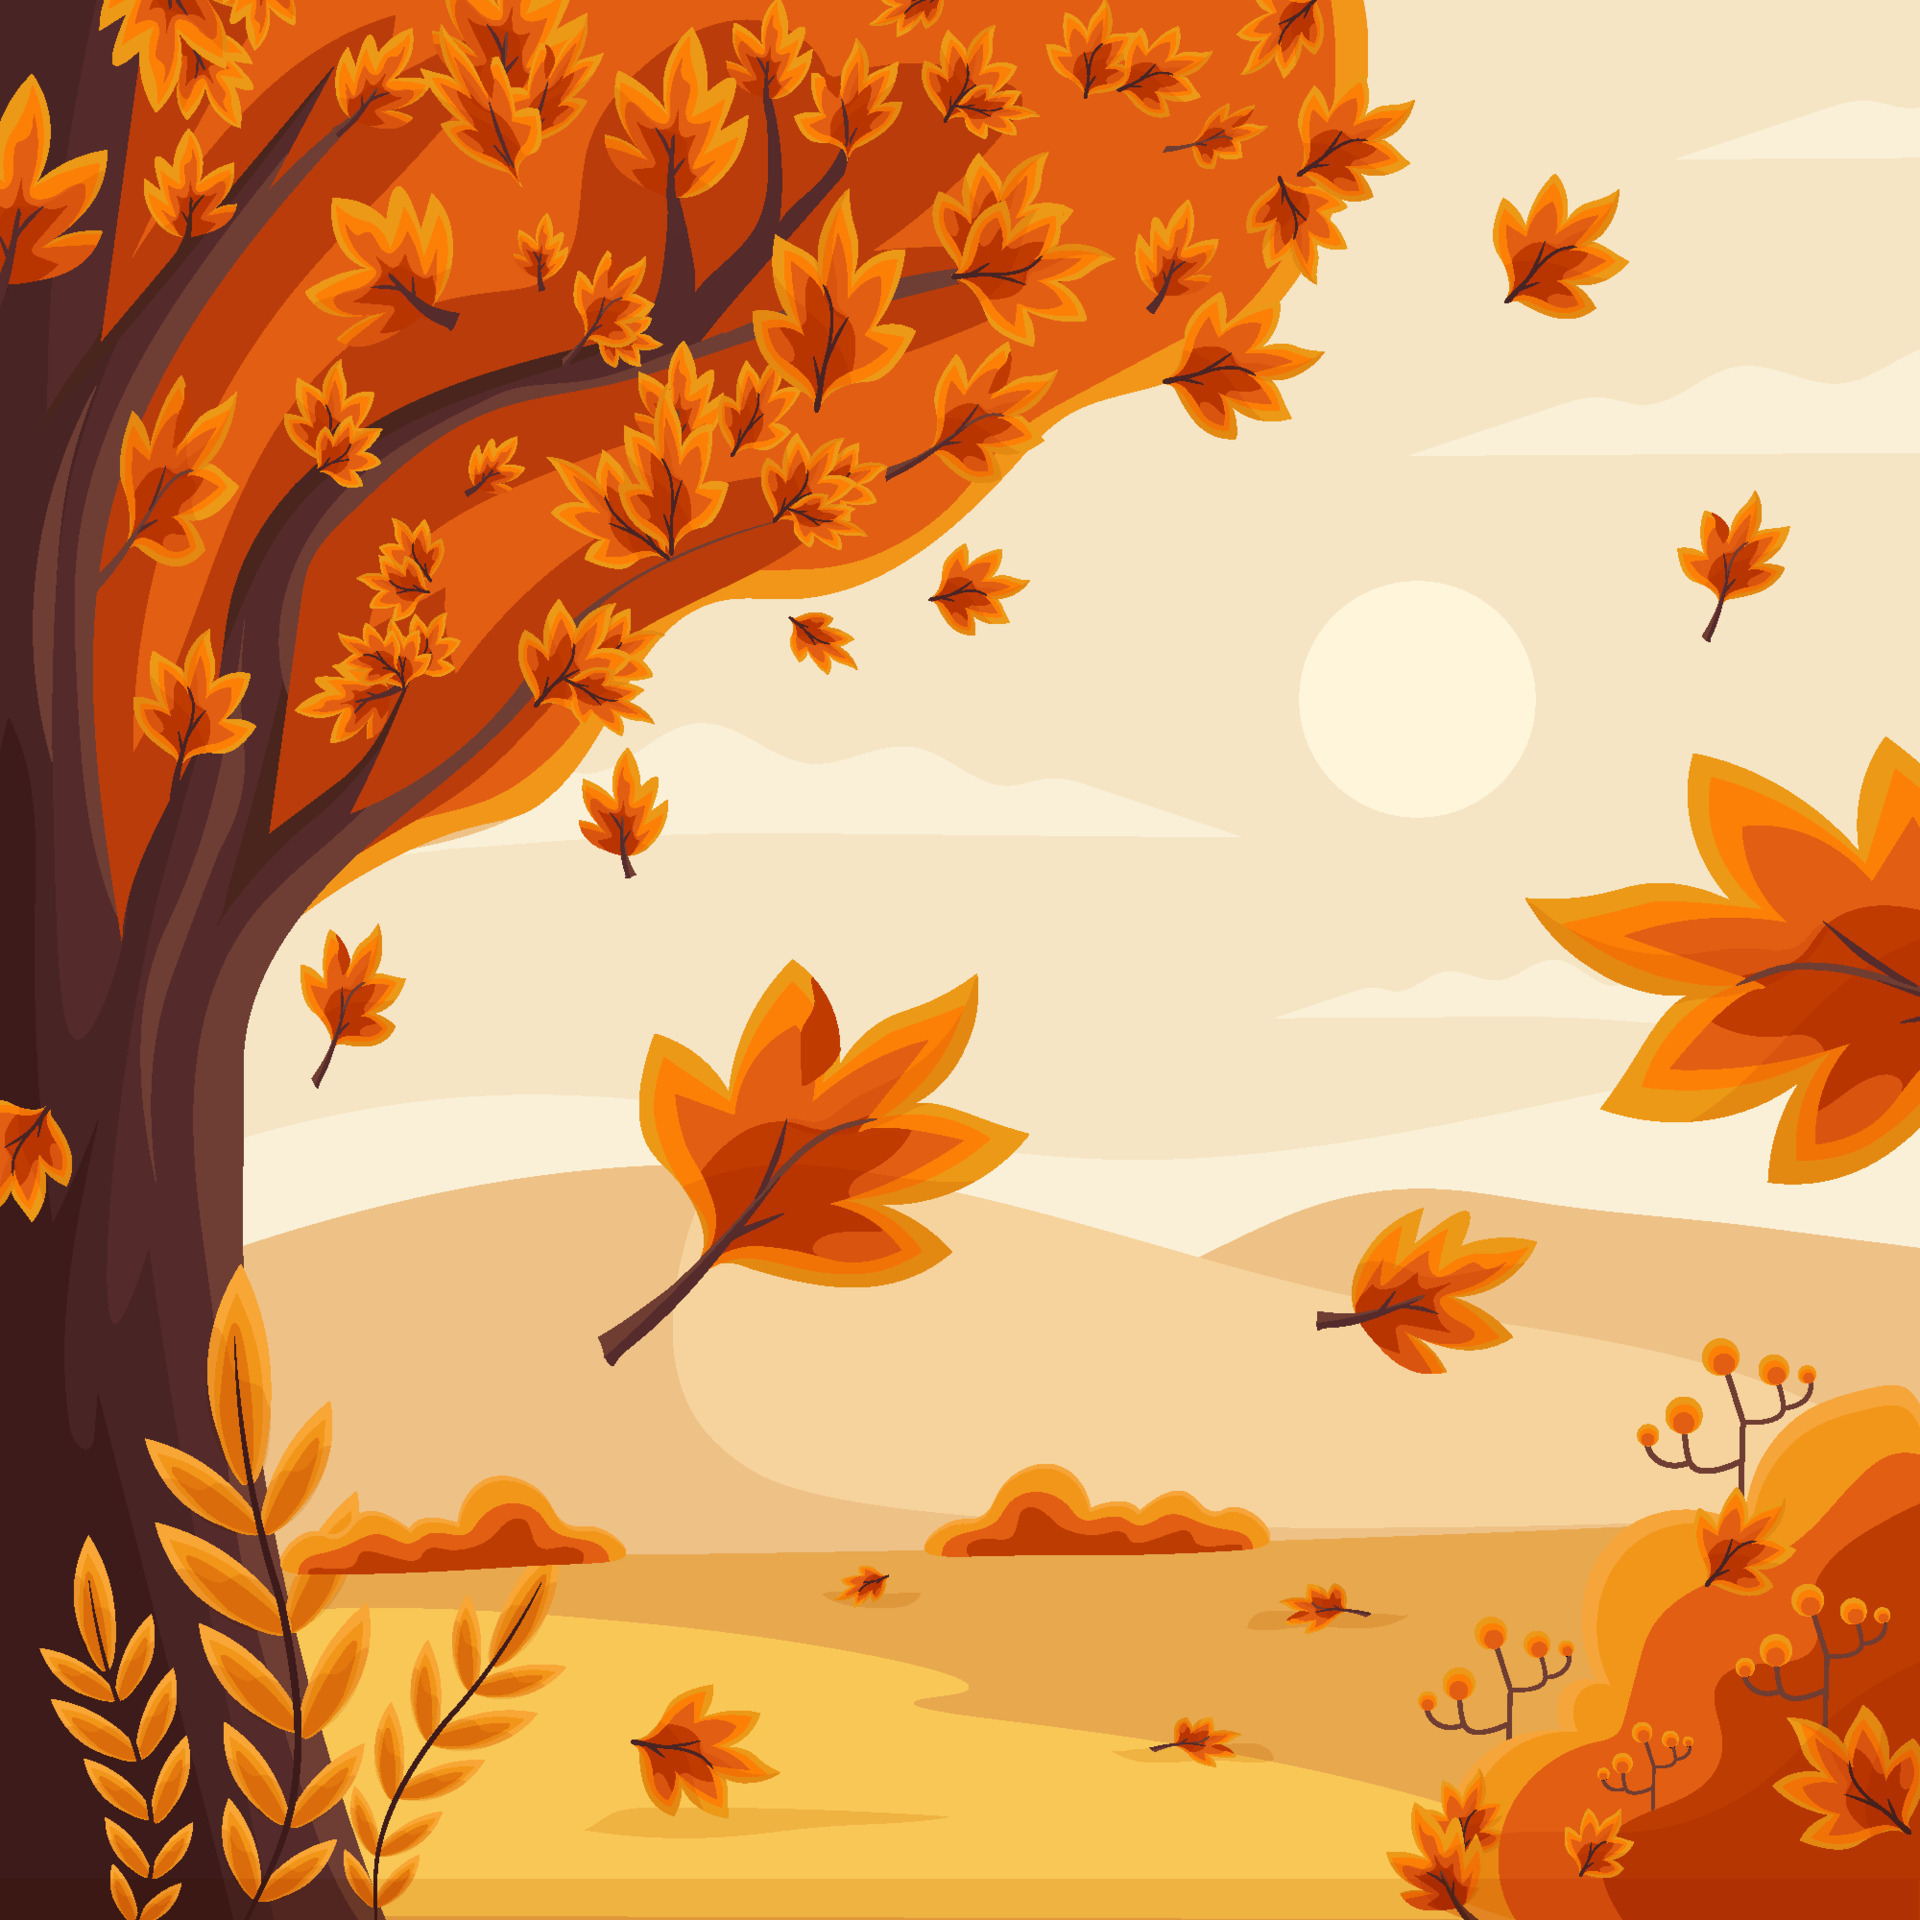 Maple Tree of Fallen Leaves Autumn Season Square Background